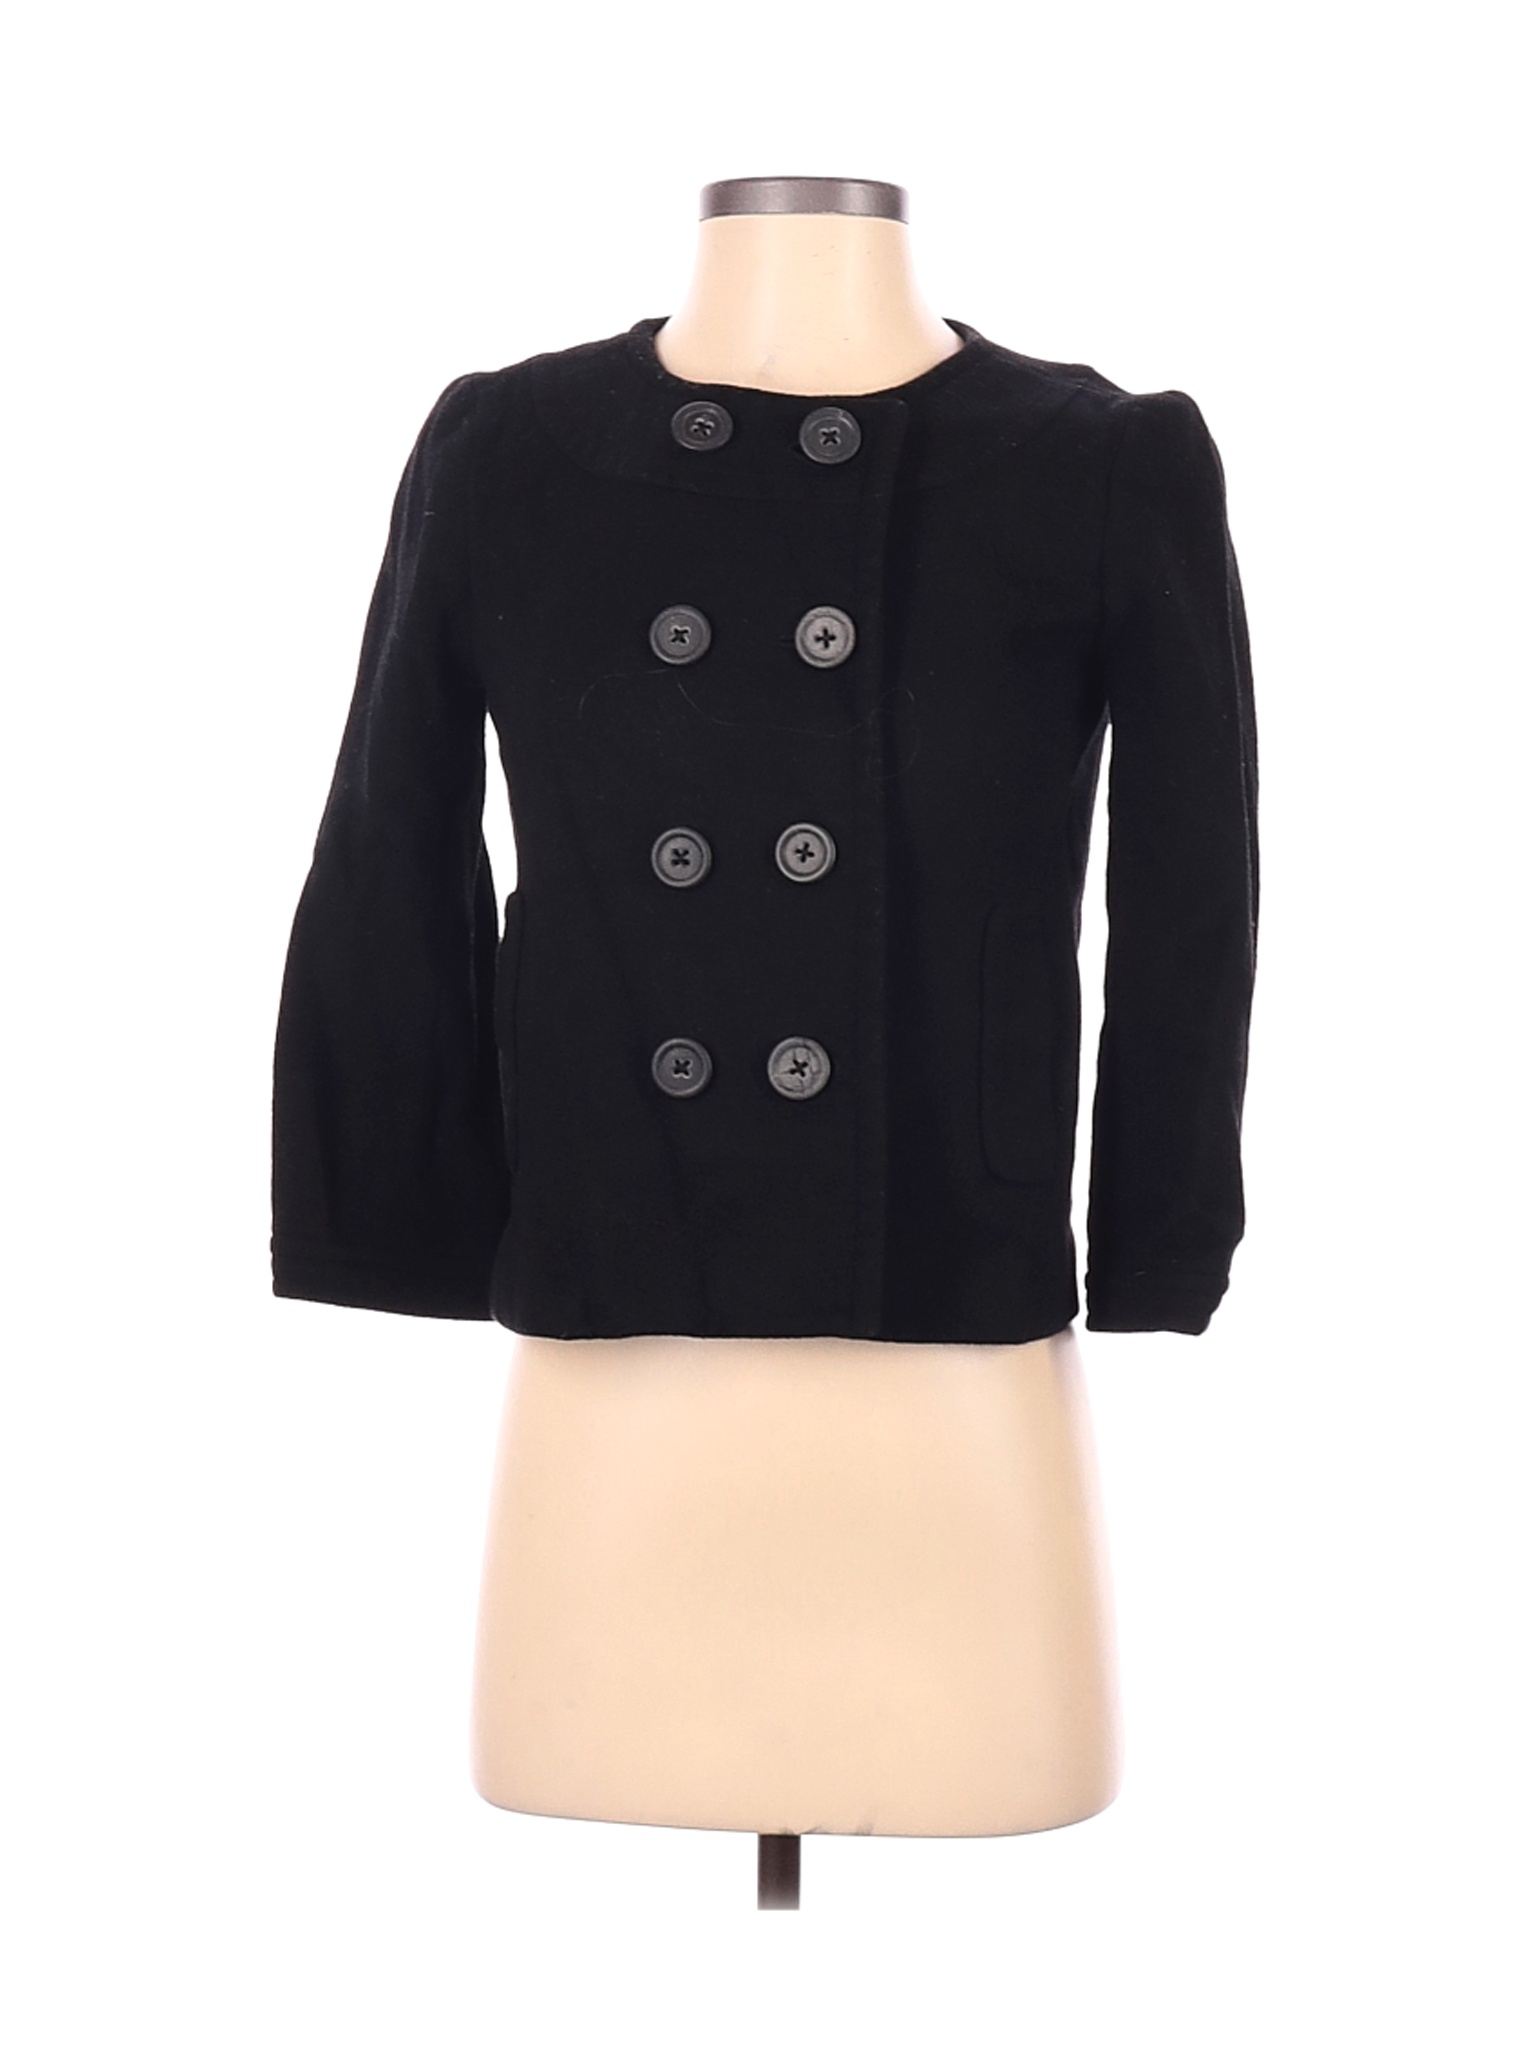 J.Crew Women Black Wool Coat 2 | eBay